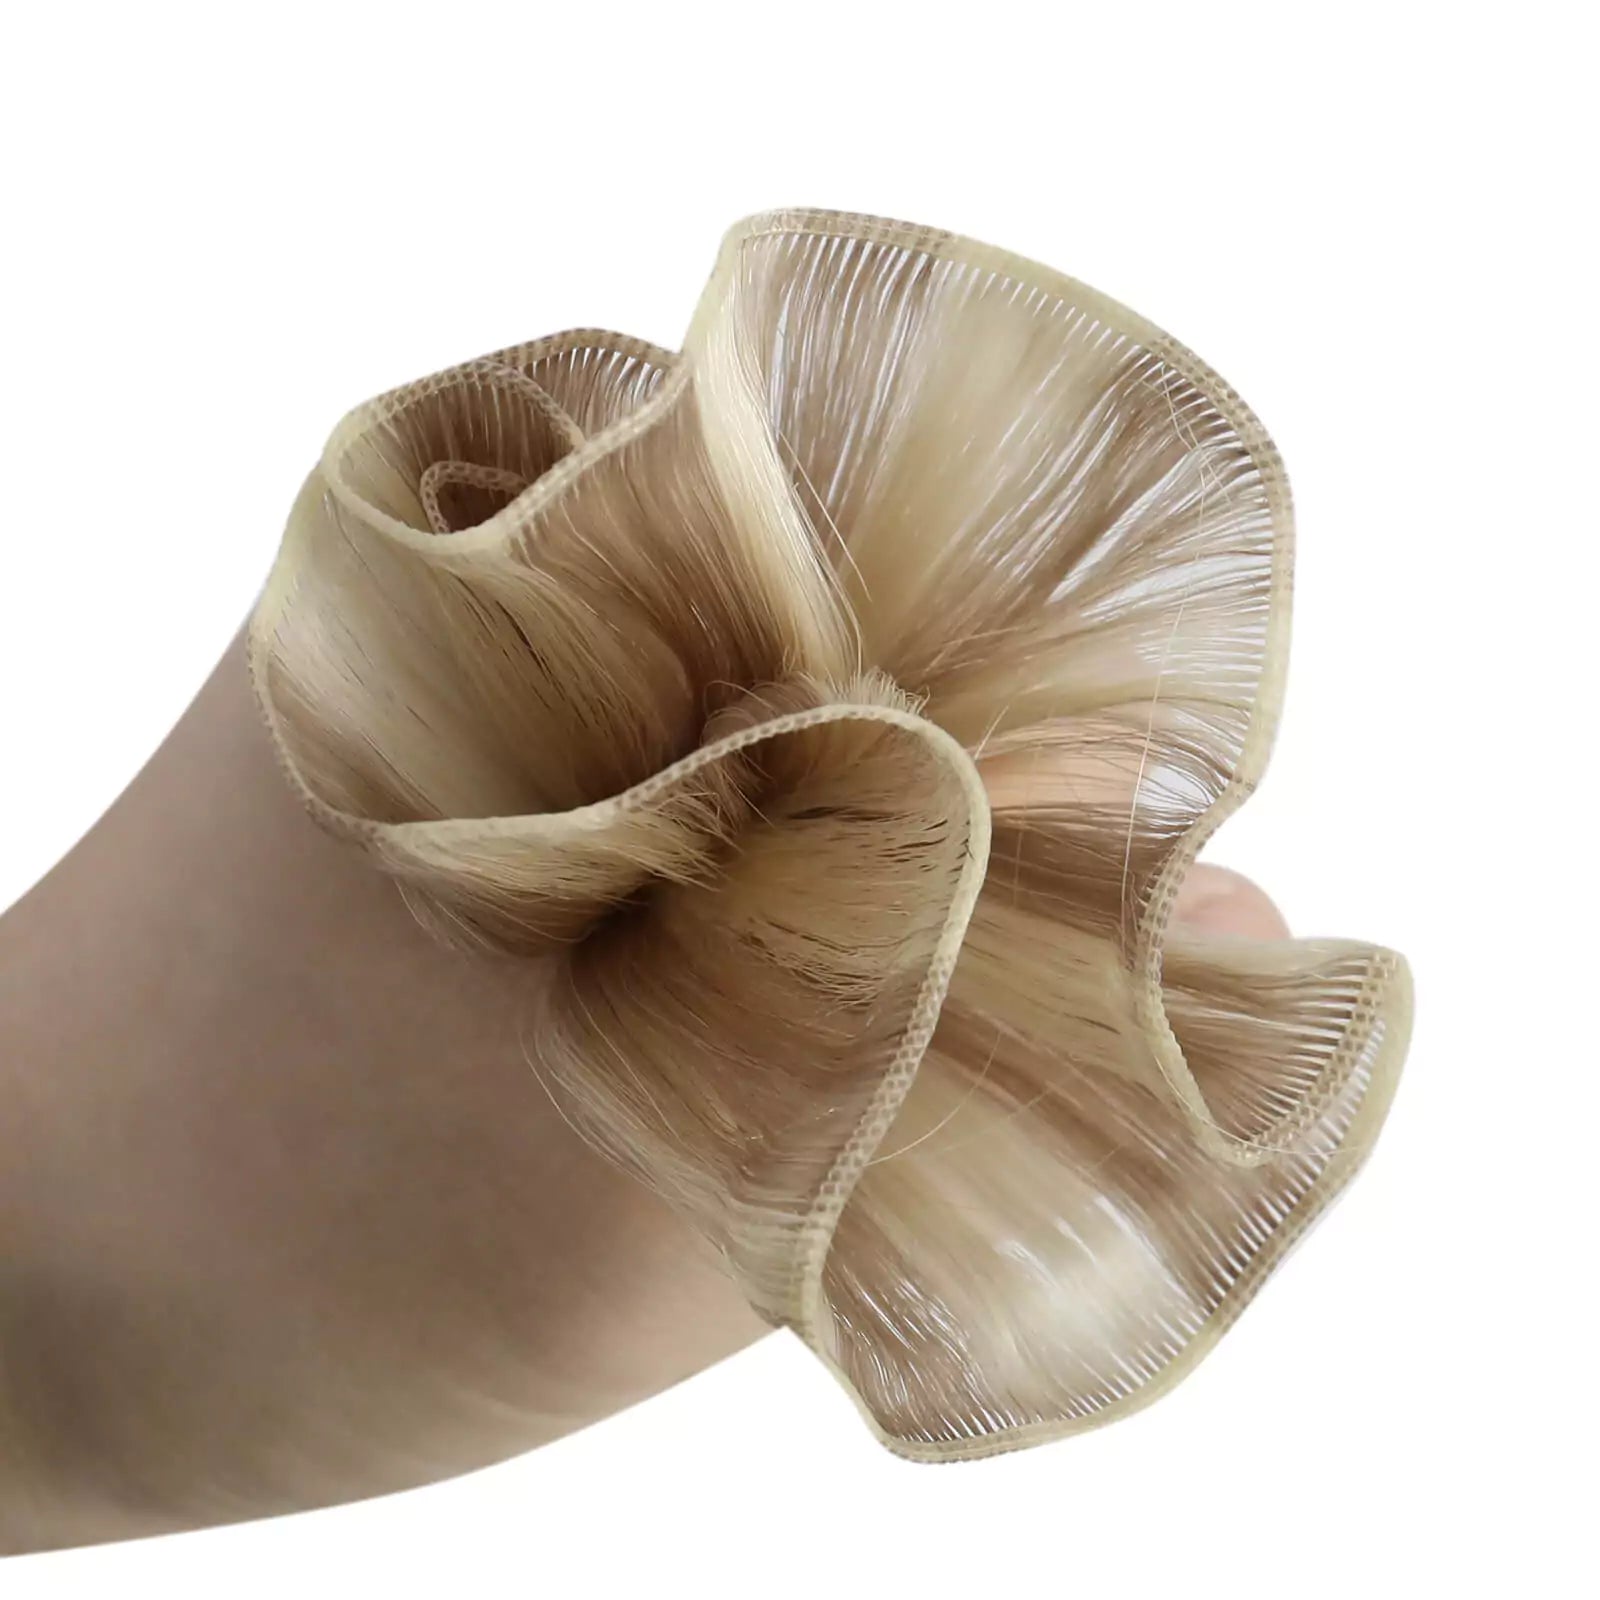 sew in weave hair extensions virgin remy human hair